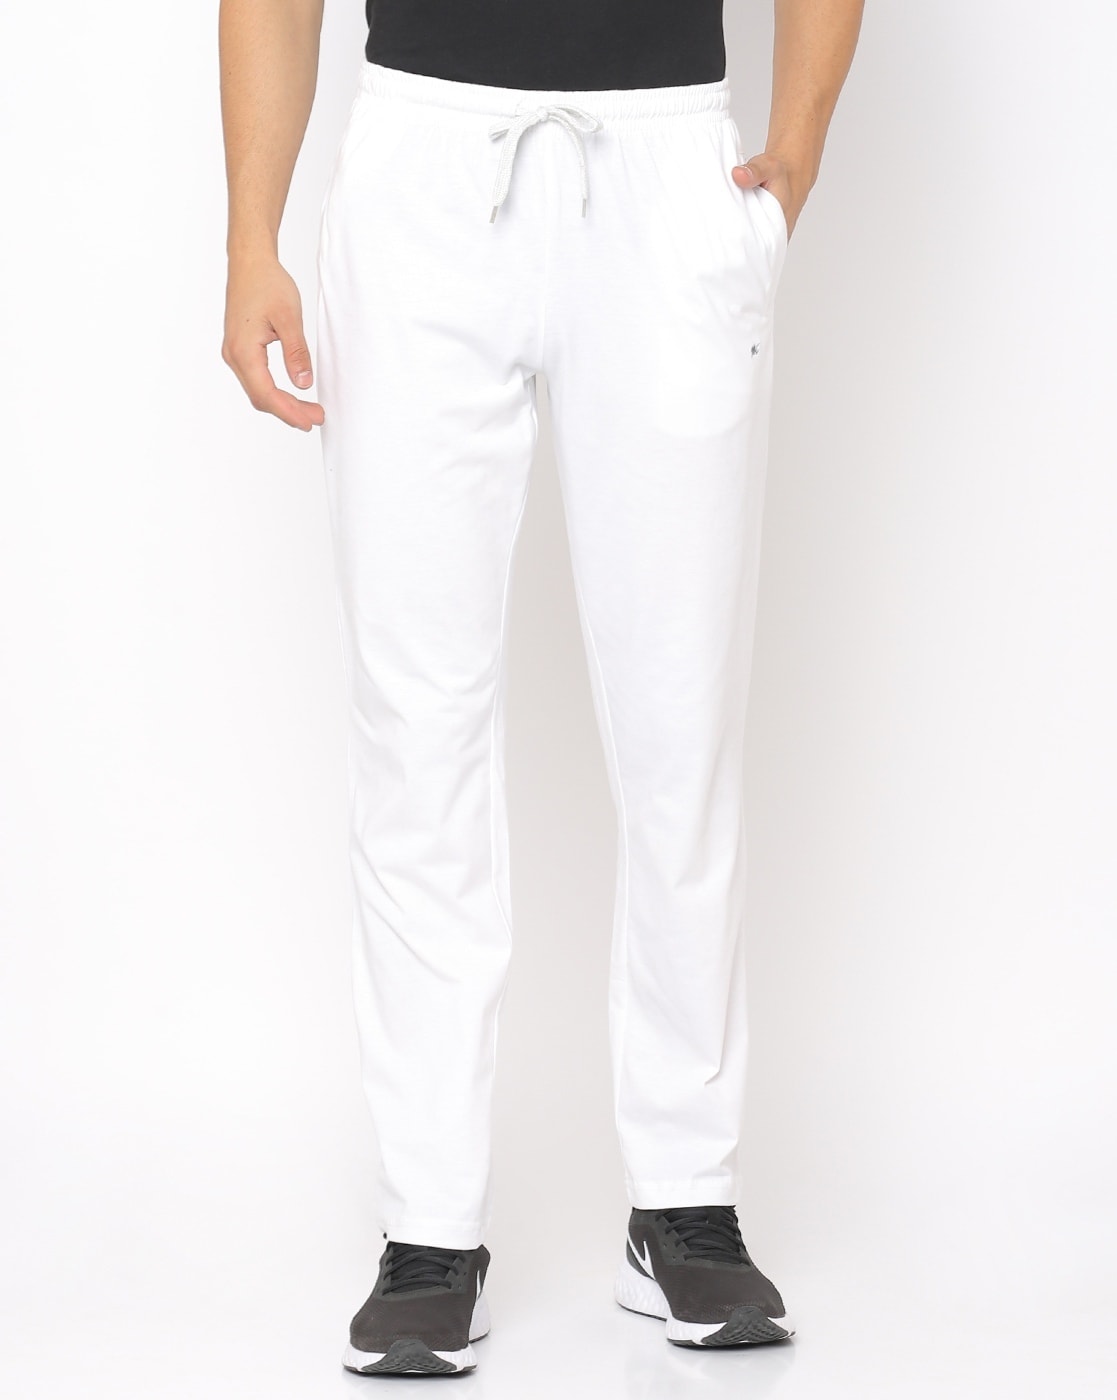 White Joggers Mockup, Front and Side Views. Sweatpants Stock Illustration -  Illustration of fashion, daks: 219483540